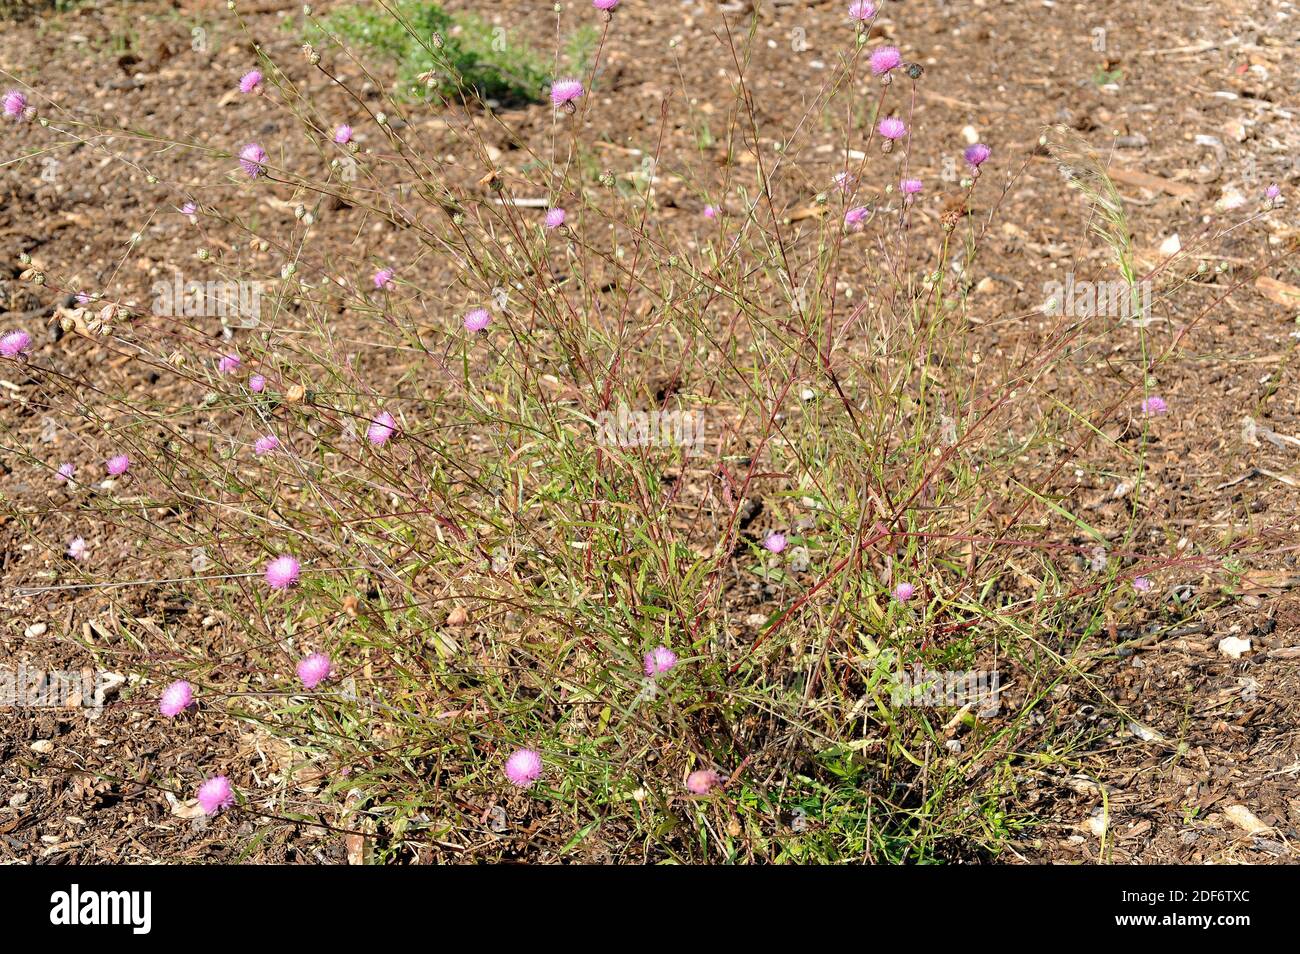 Pan de pastor (Mantisalca salmantica) is a perennial herb native to Mediterranean Basin. Flowering plant. Stock Photo